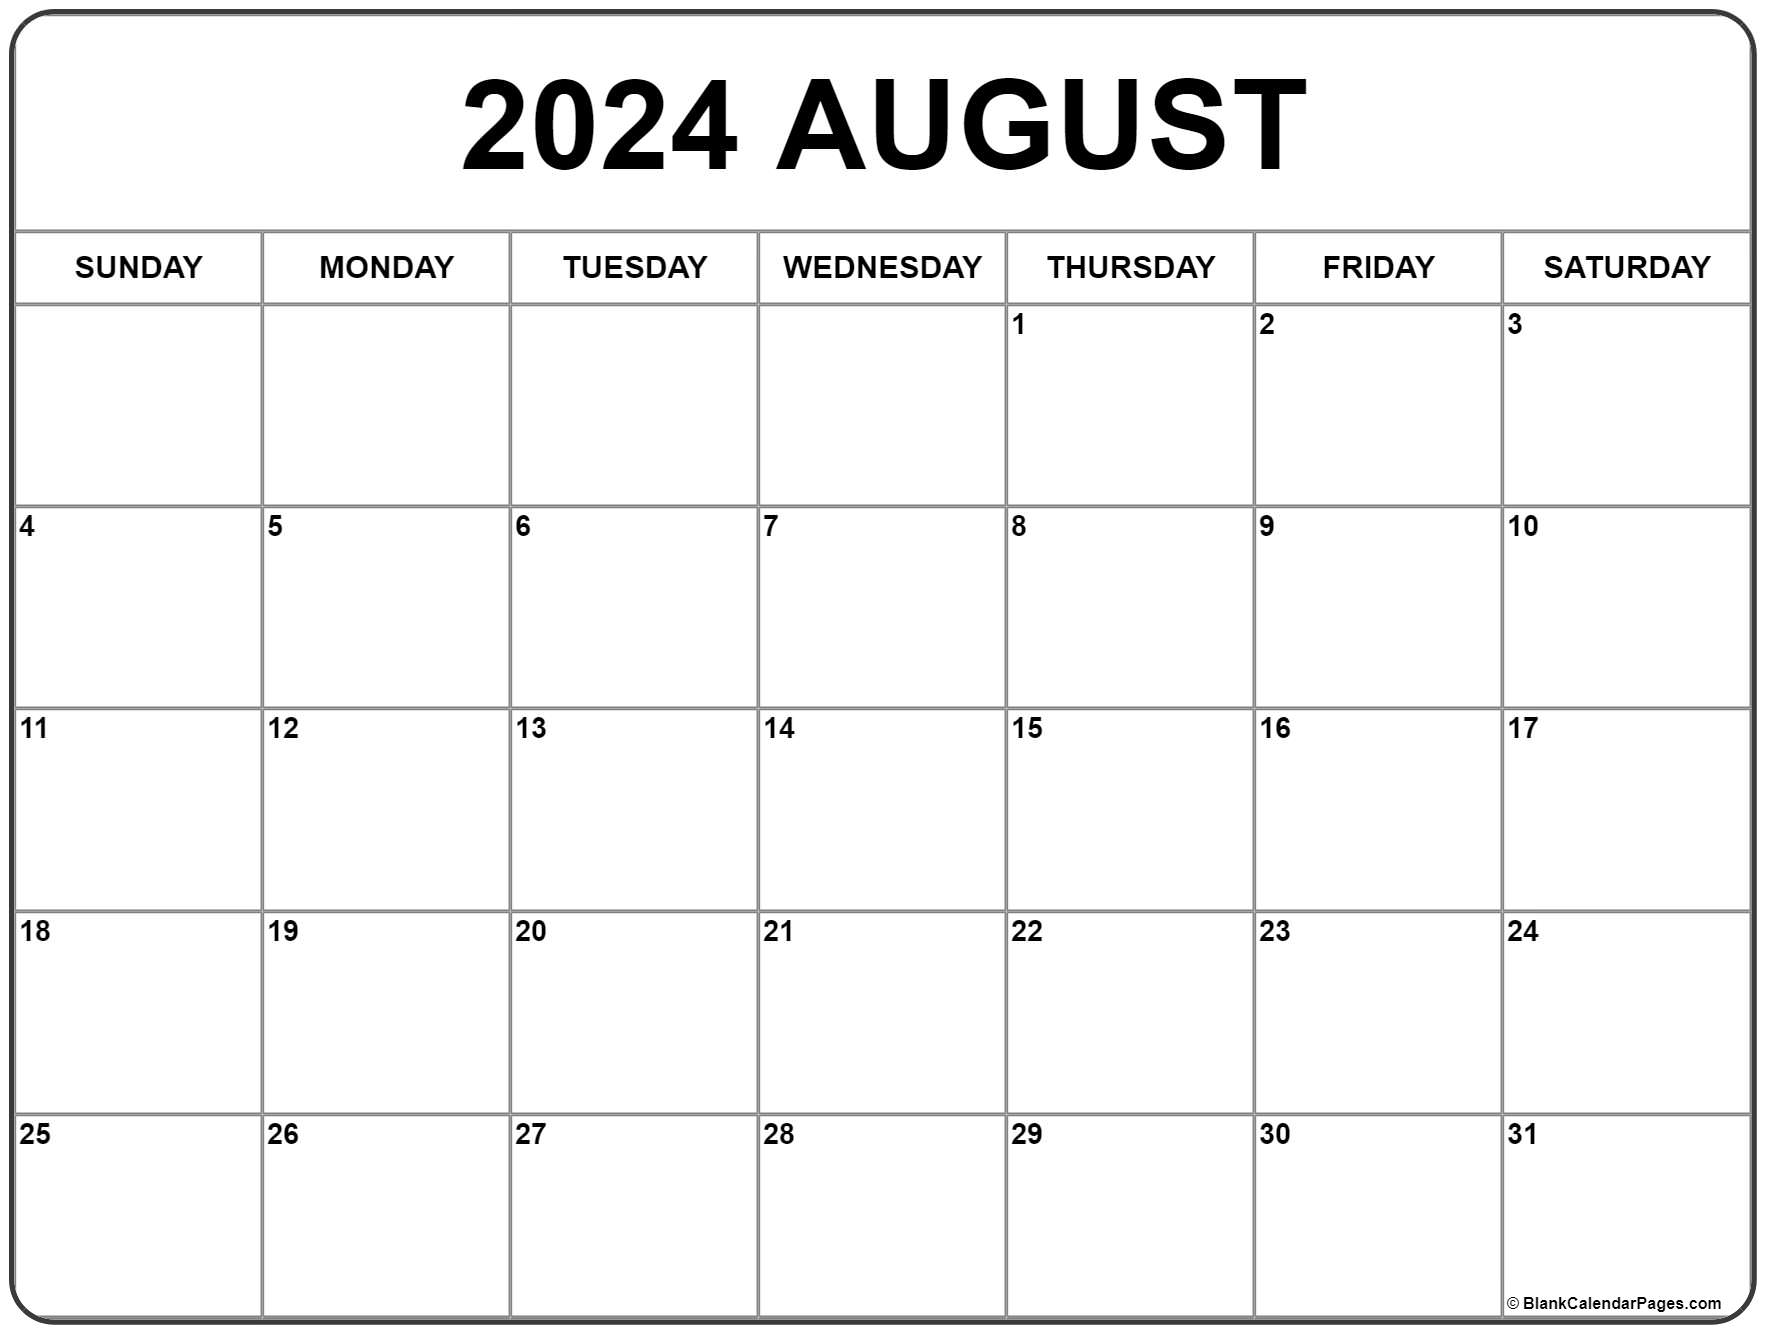 July 2021 Blank Calendar August 2021 calendar | free printable monthly calendars